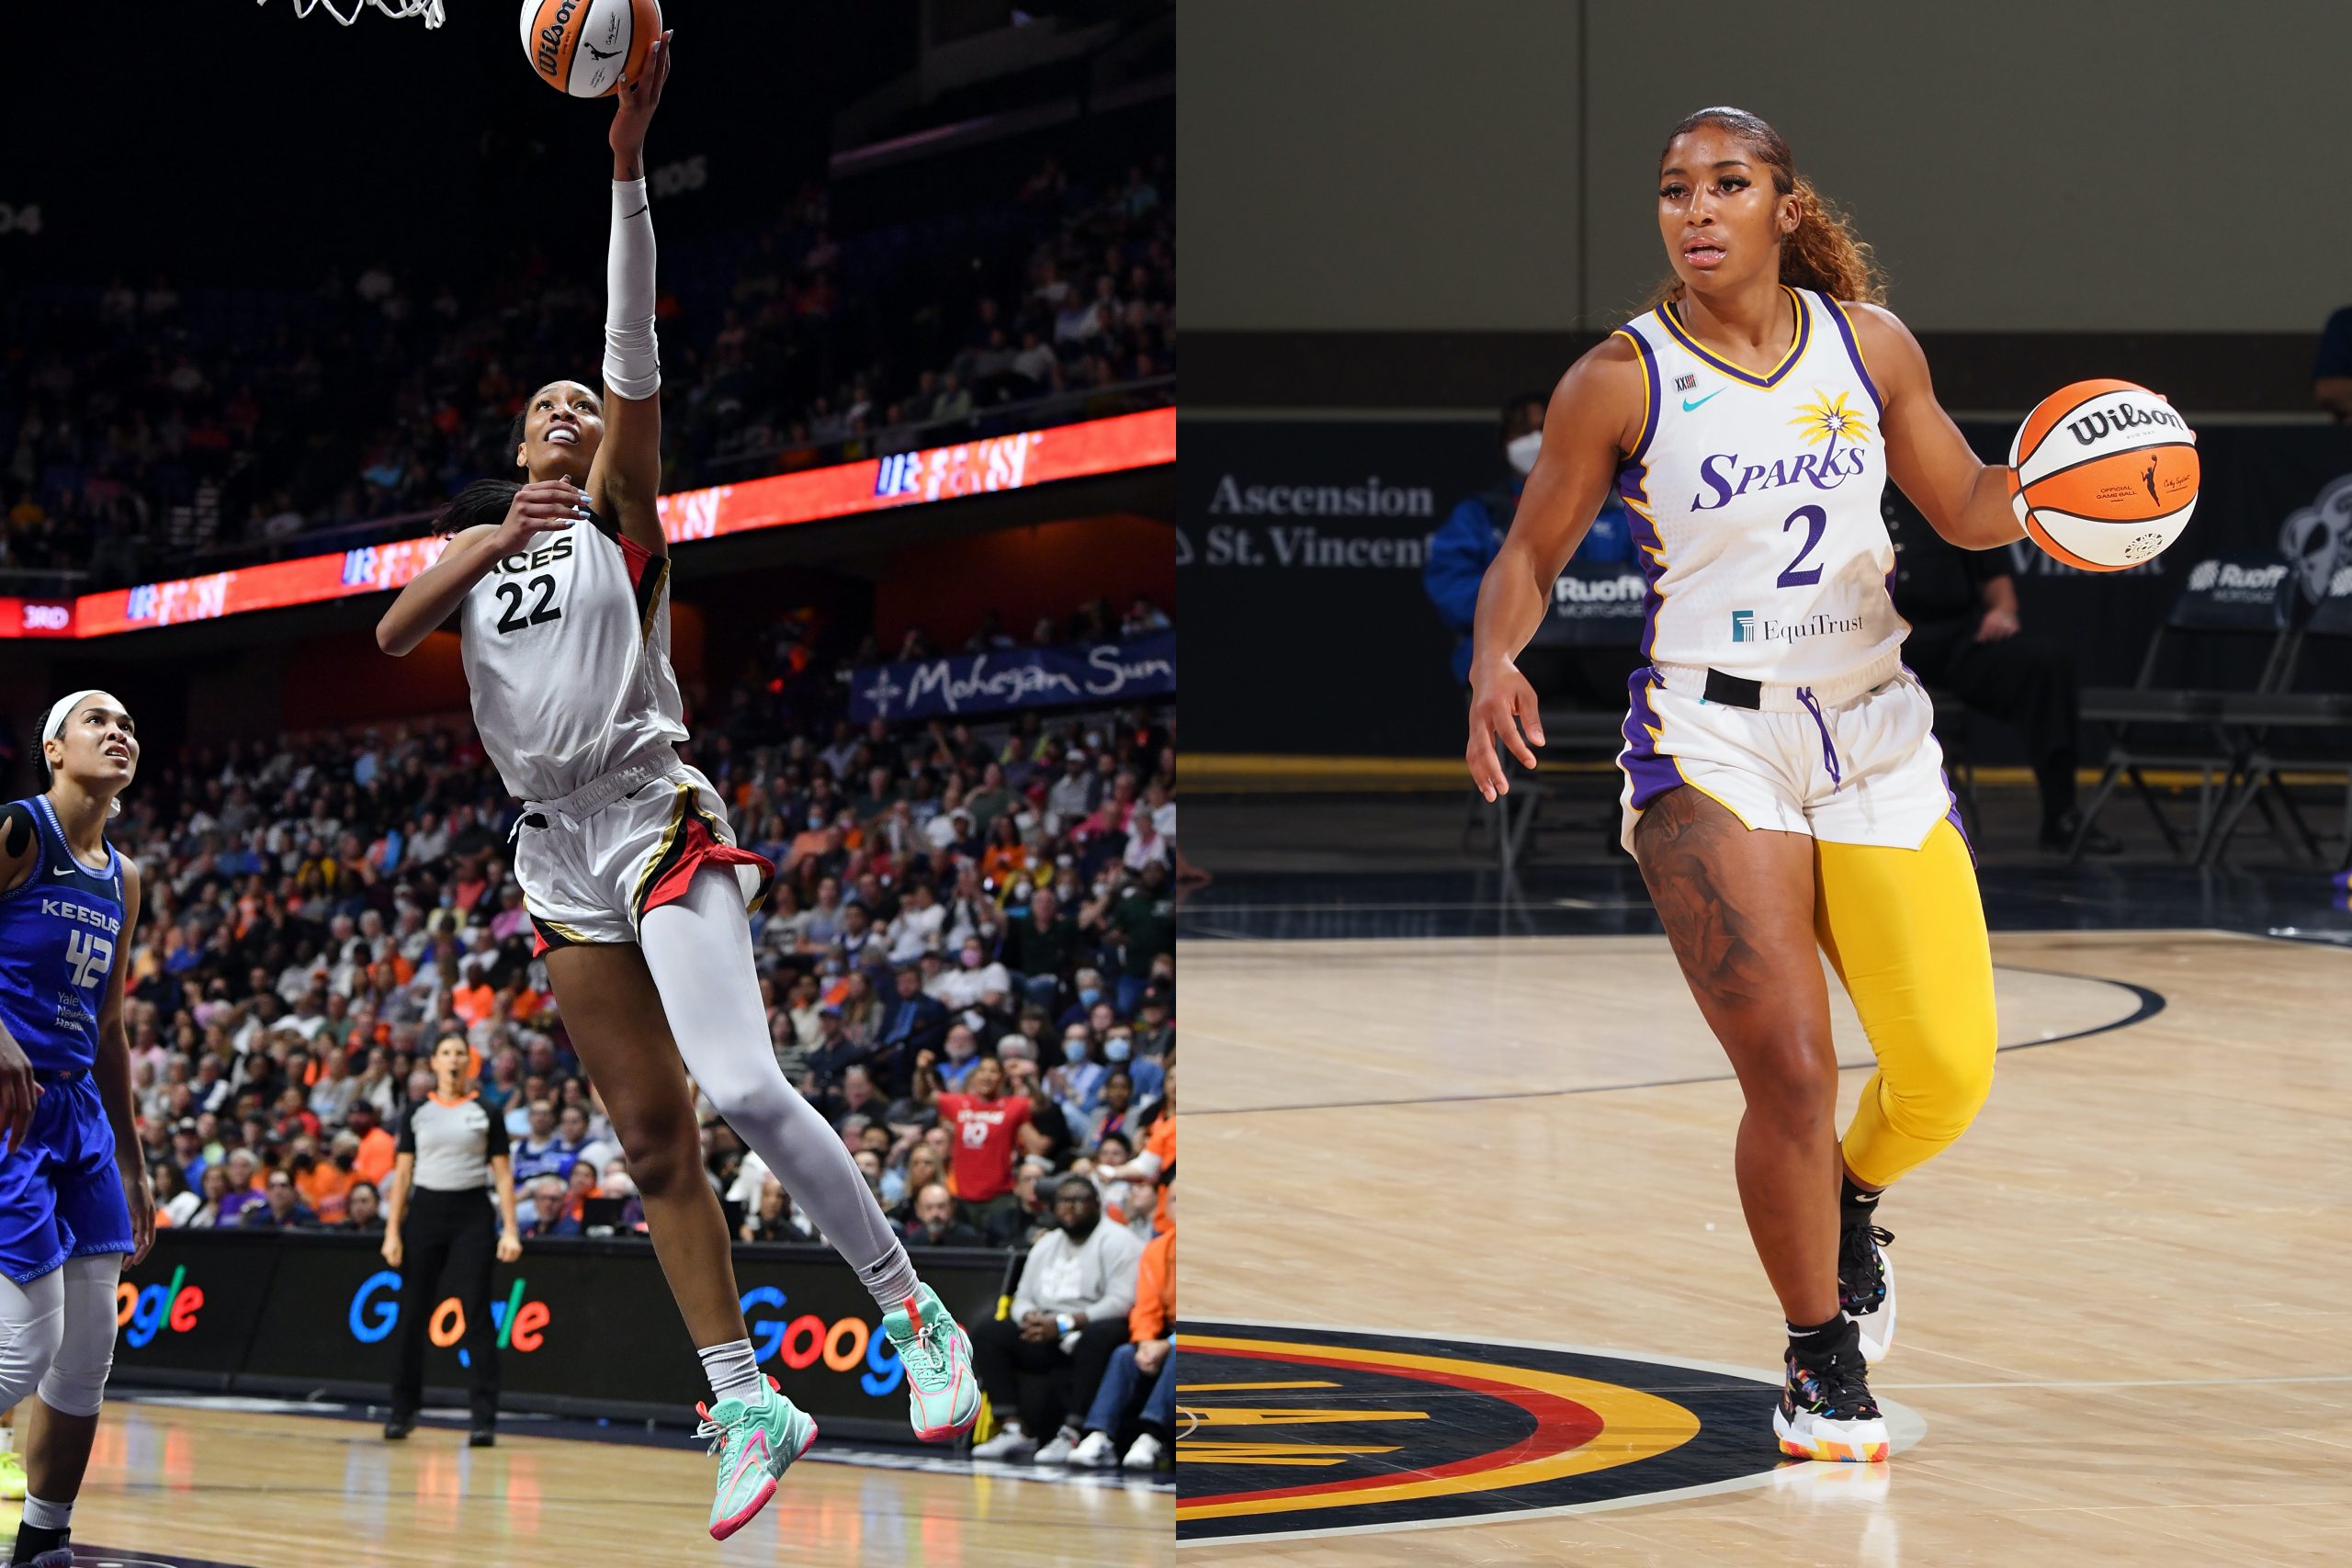 Why Do Basketball Players Wear Leg Sleeves?